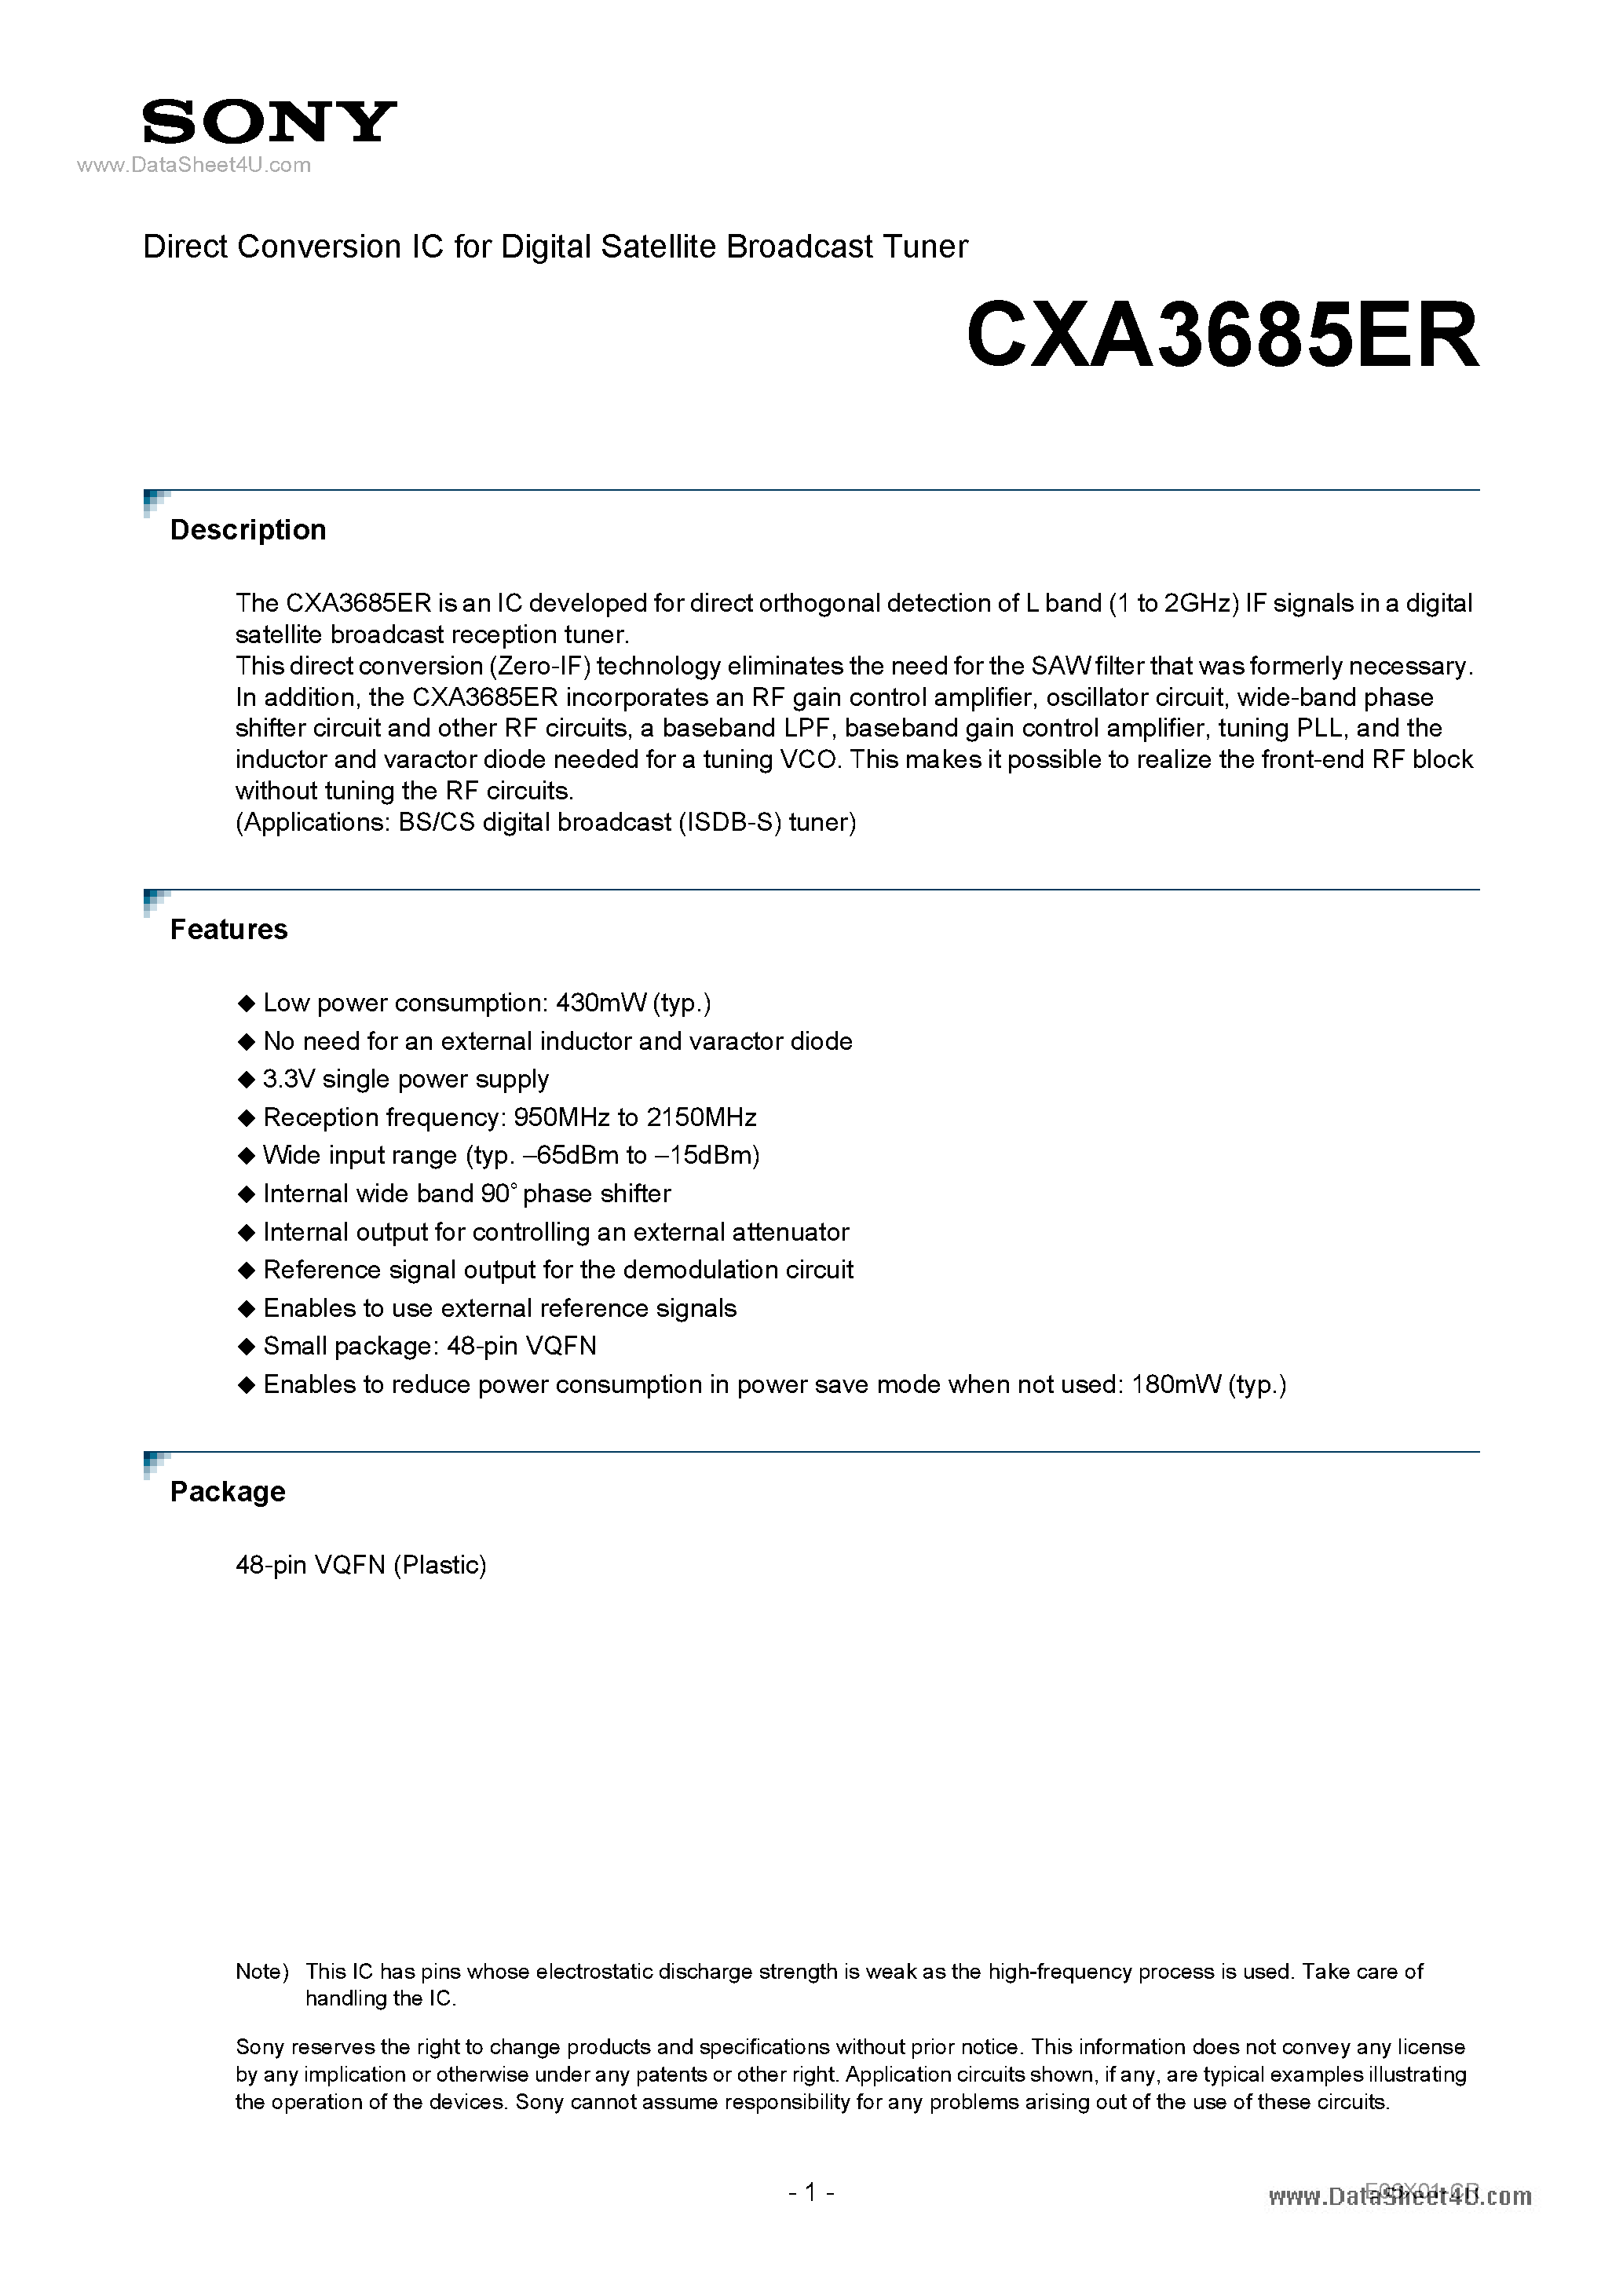 Datasheet CXA3685ER - Direct Conversion IC page 1